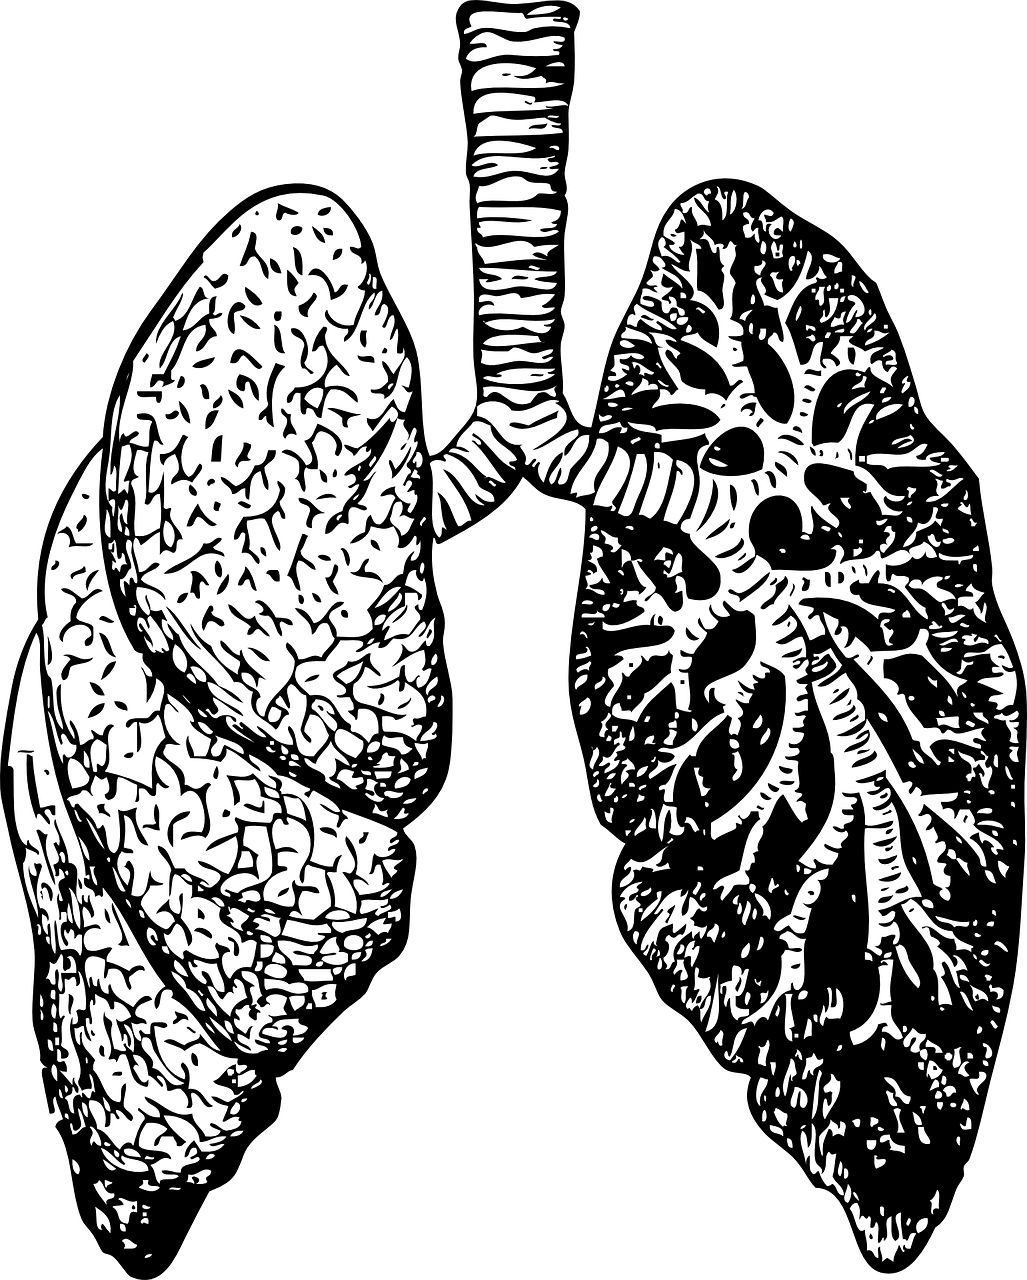 Pixabay Lungs Gb782f9c48 1280